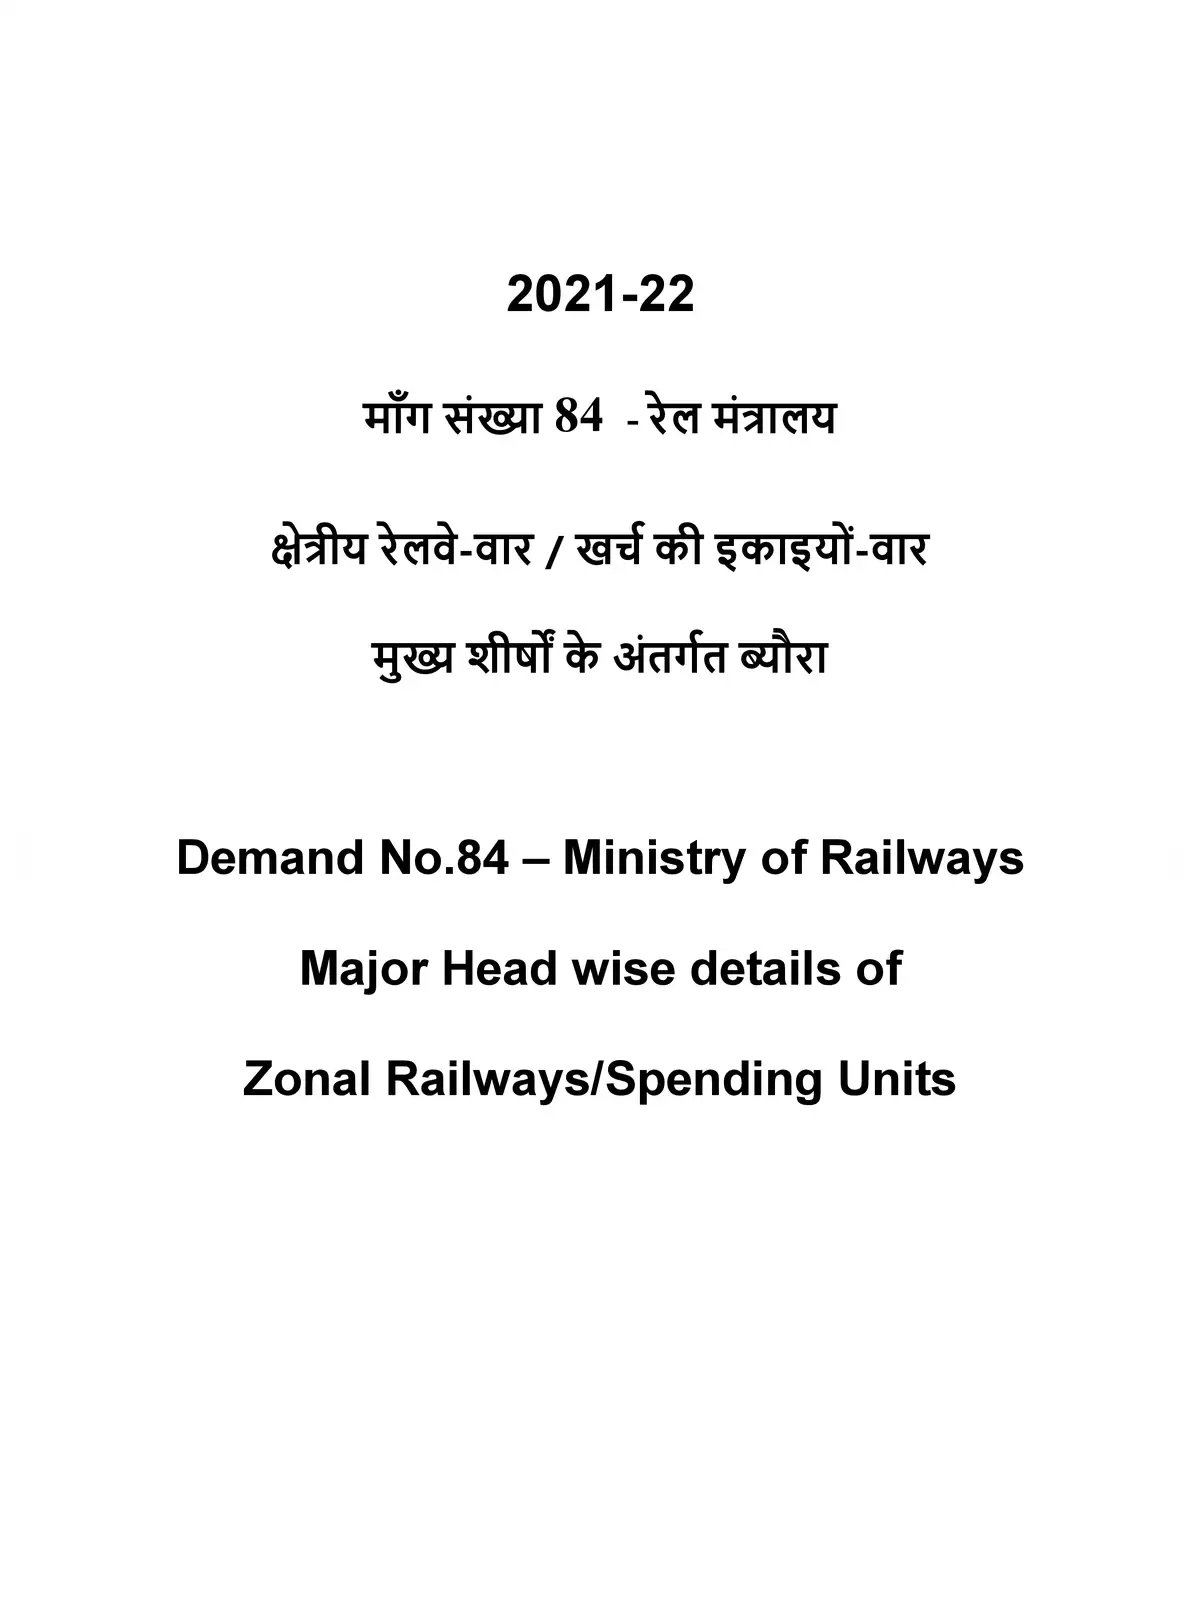 Indian Railway Budget 2021- 2022